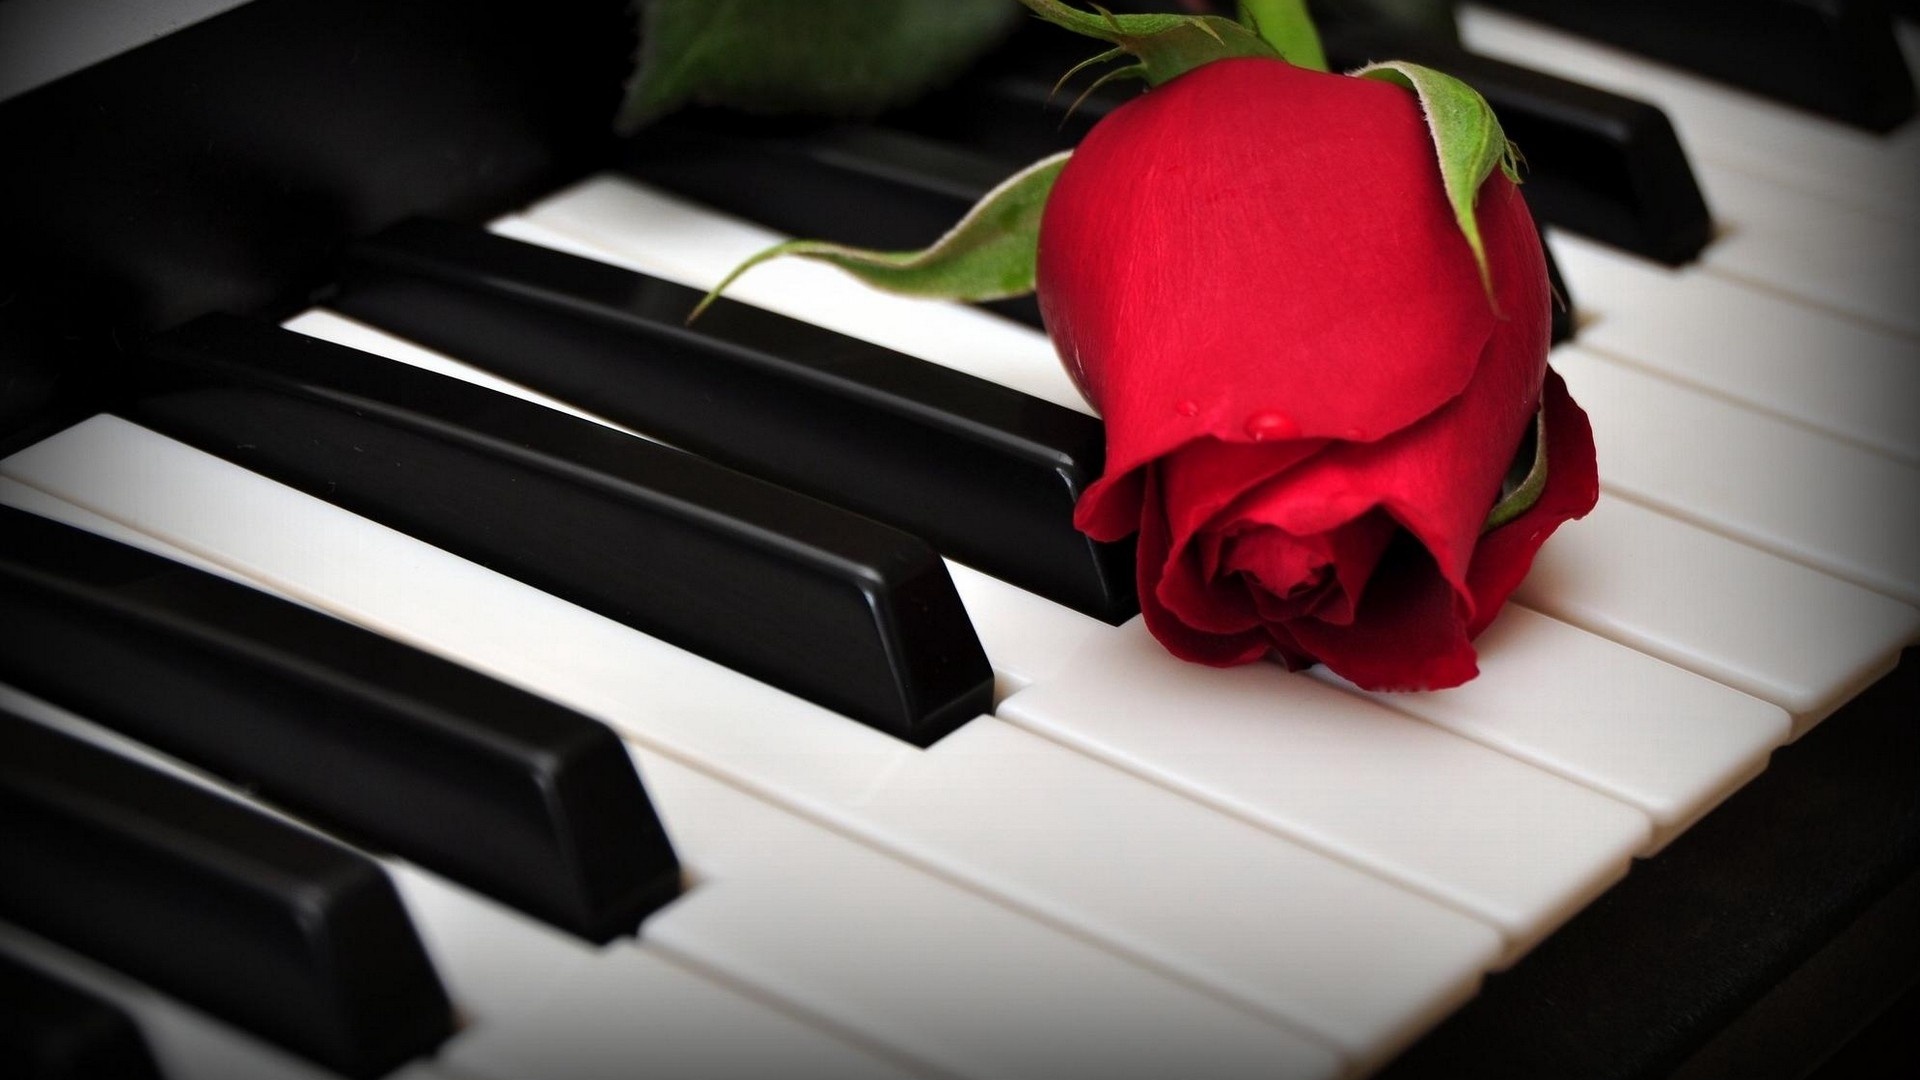 Piano: Tea Rose On Keys, Classical Music, White And Black Keys. 1920x1080 Full HD Wallpaper.